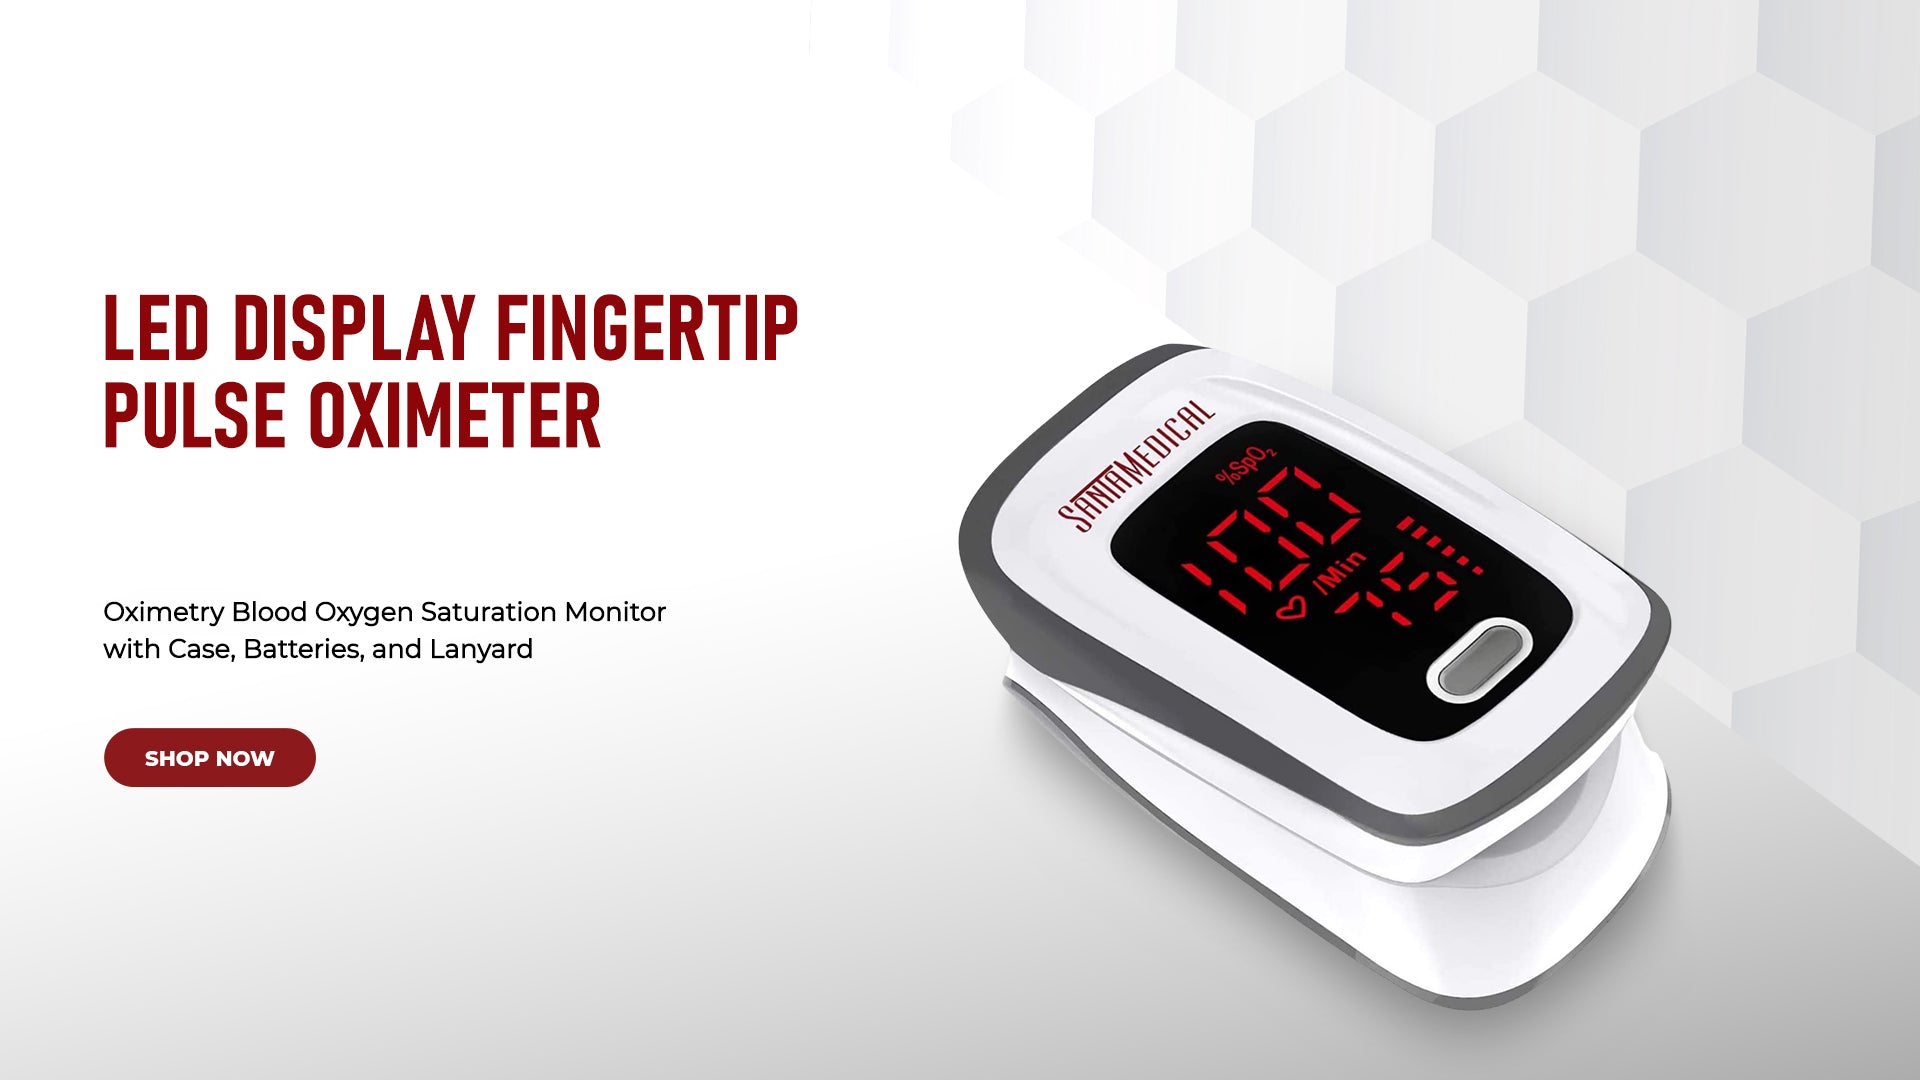 LED Display Fingertip Pulse Oximeter